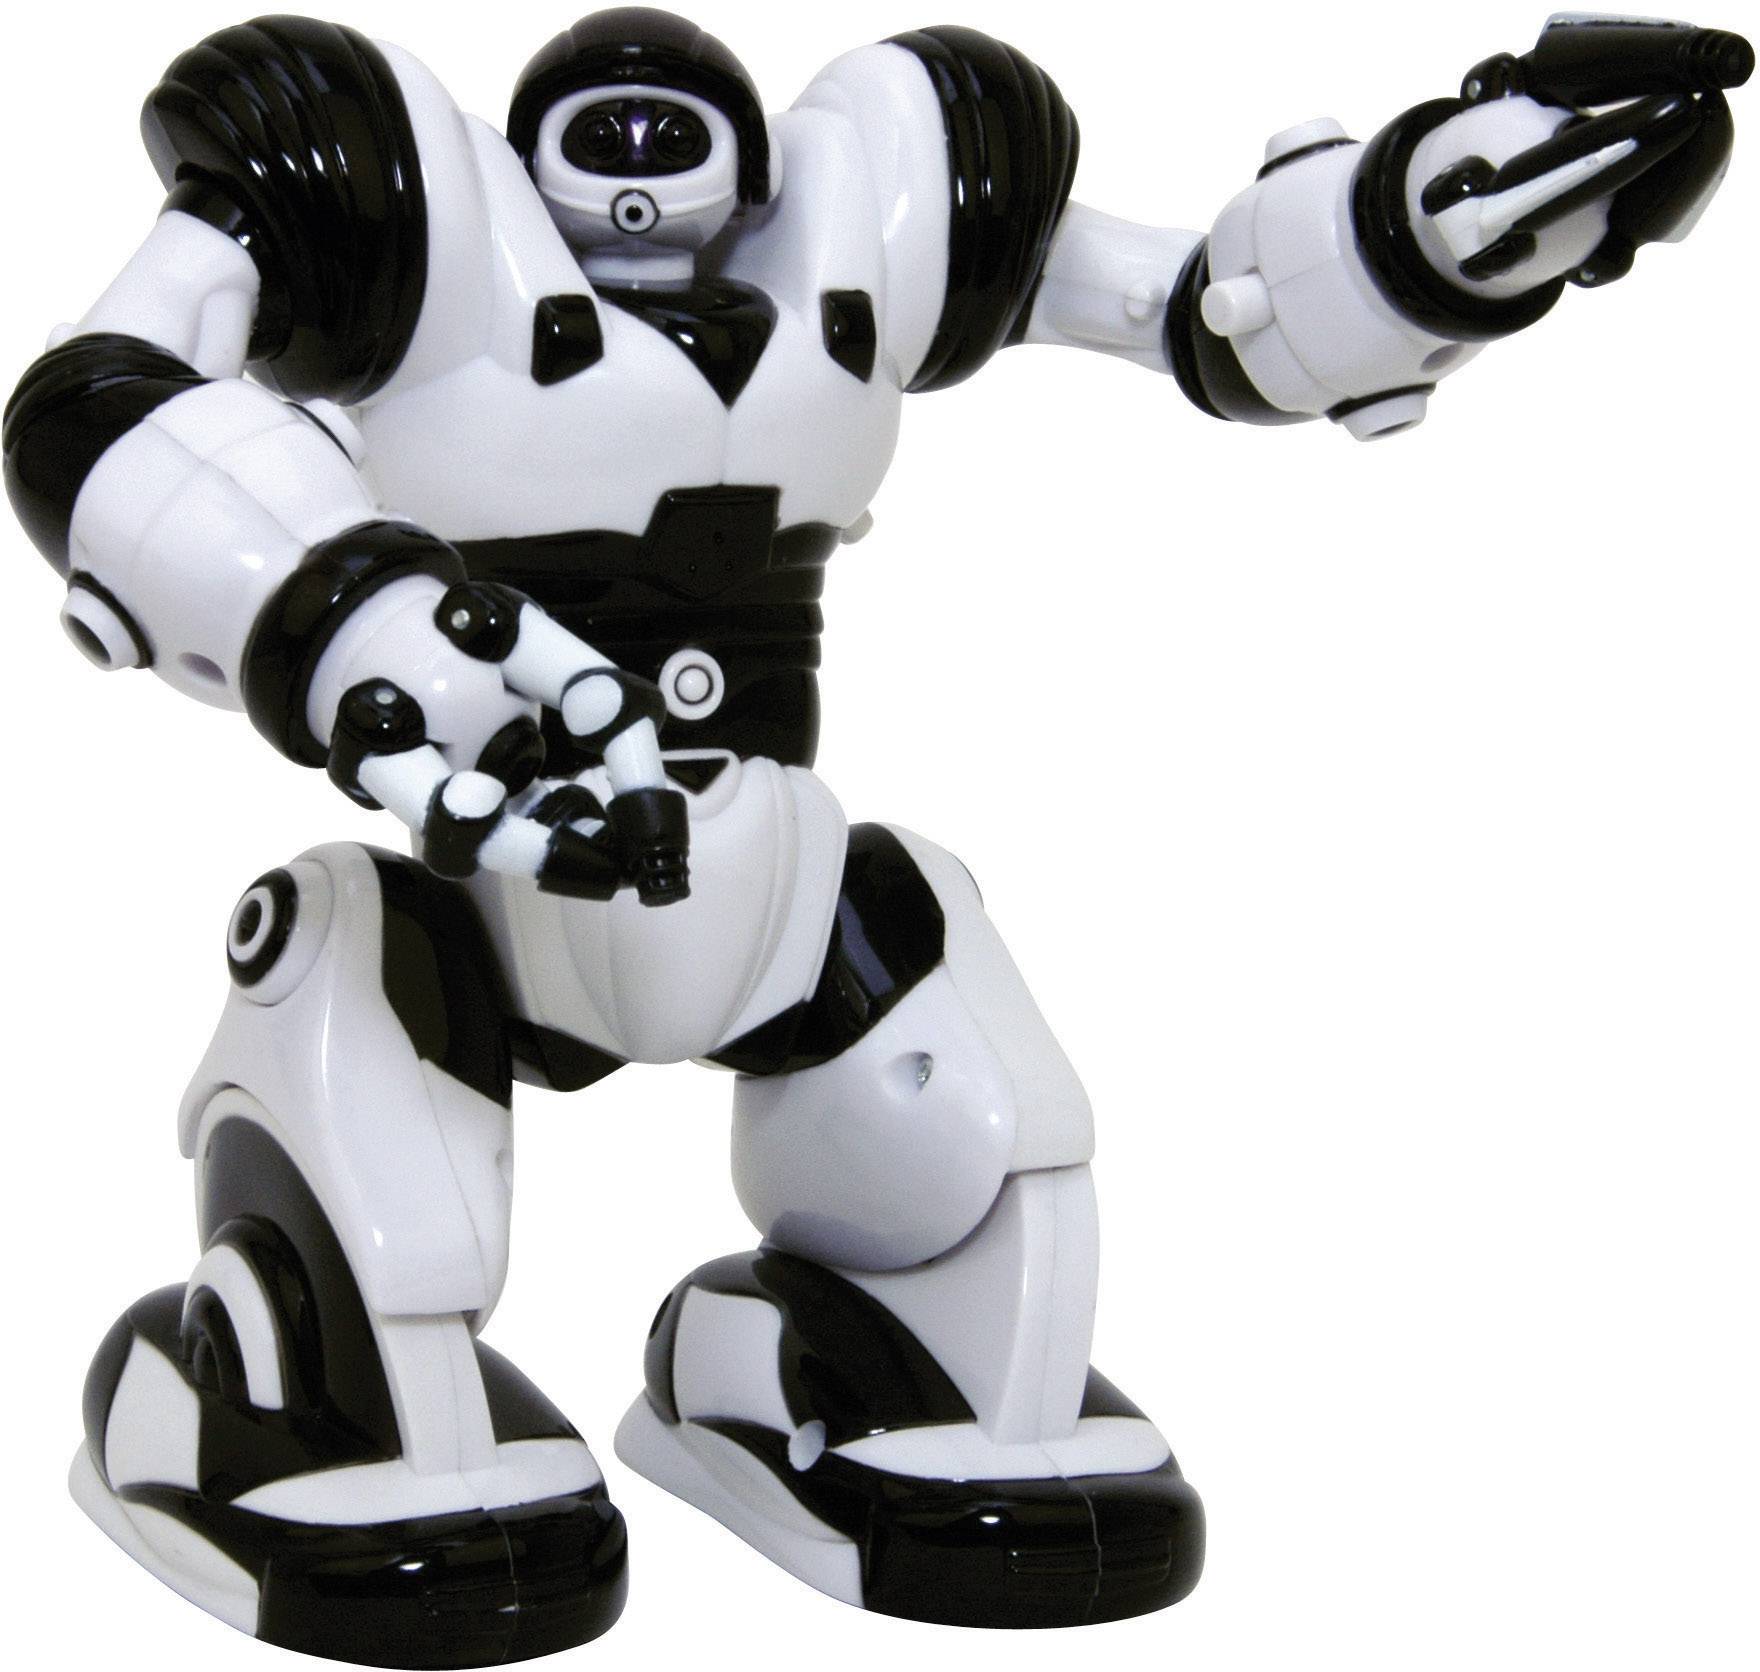 Robot Mini Robosapian wit / zwart 2 x AAA (not included)